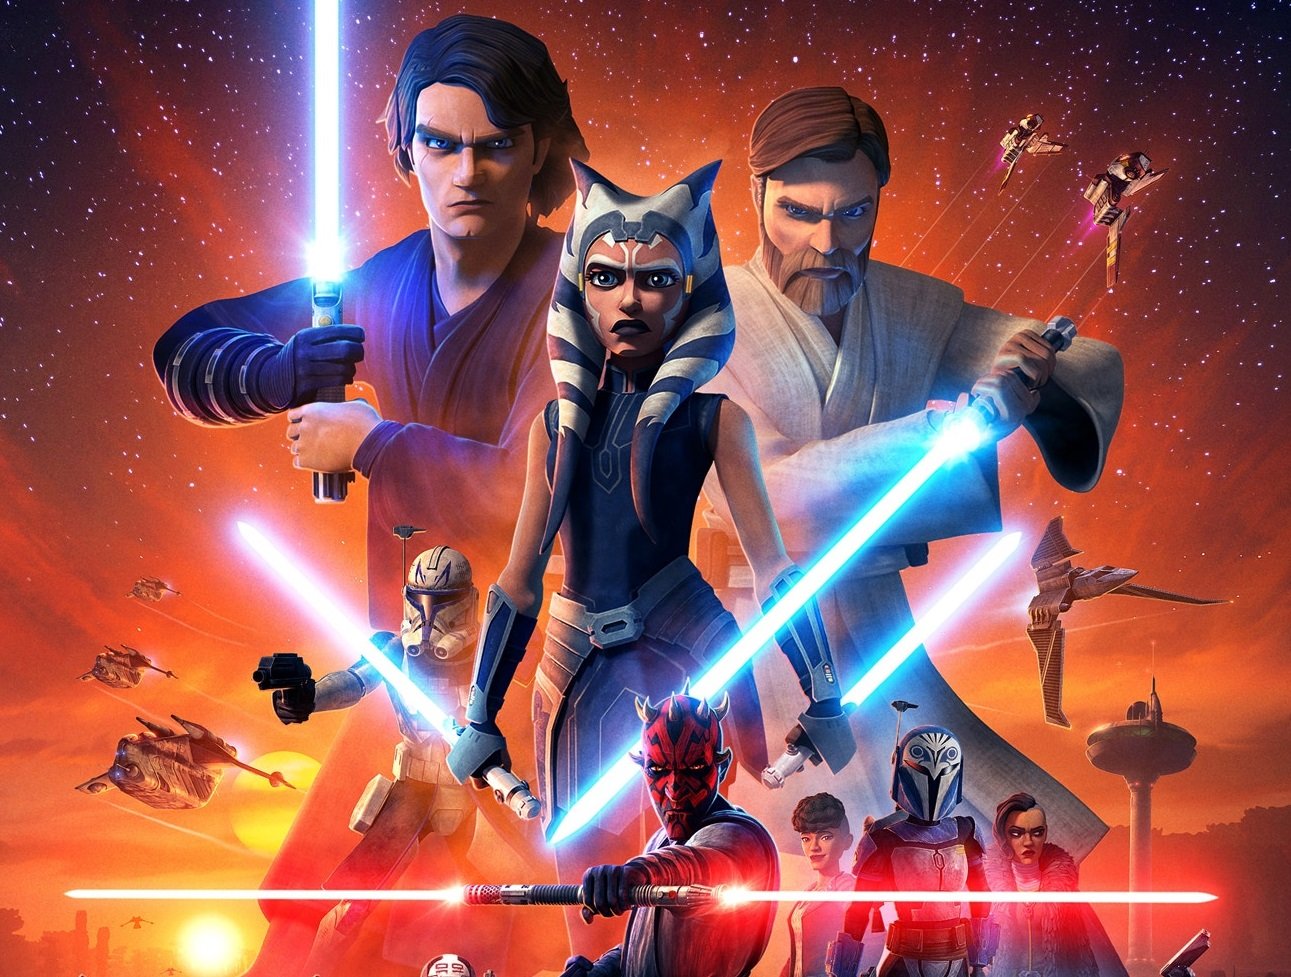 watch star wars the force awakens online reddit